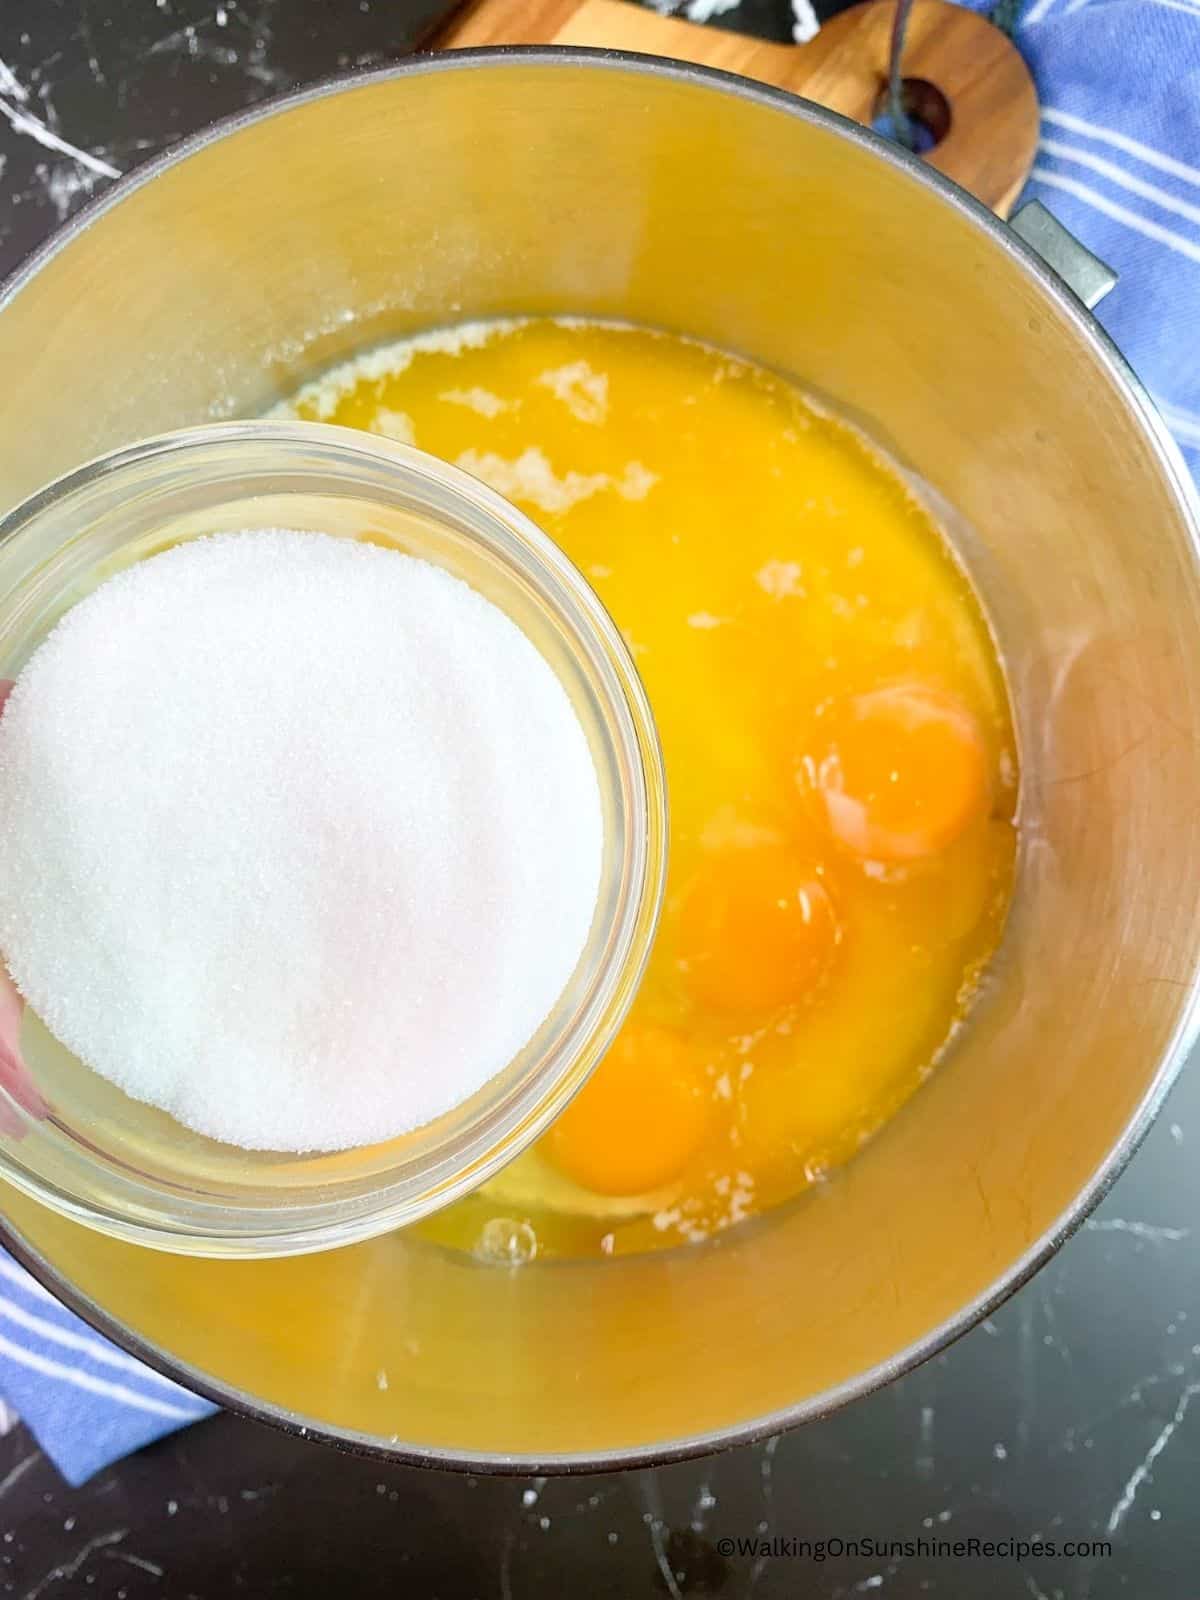 Add sugar to egg mixture.